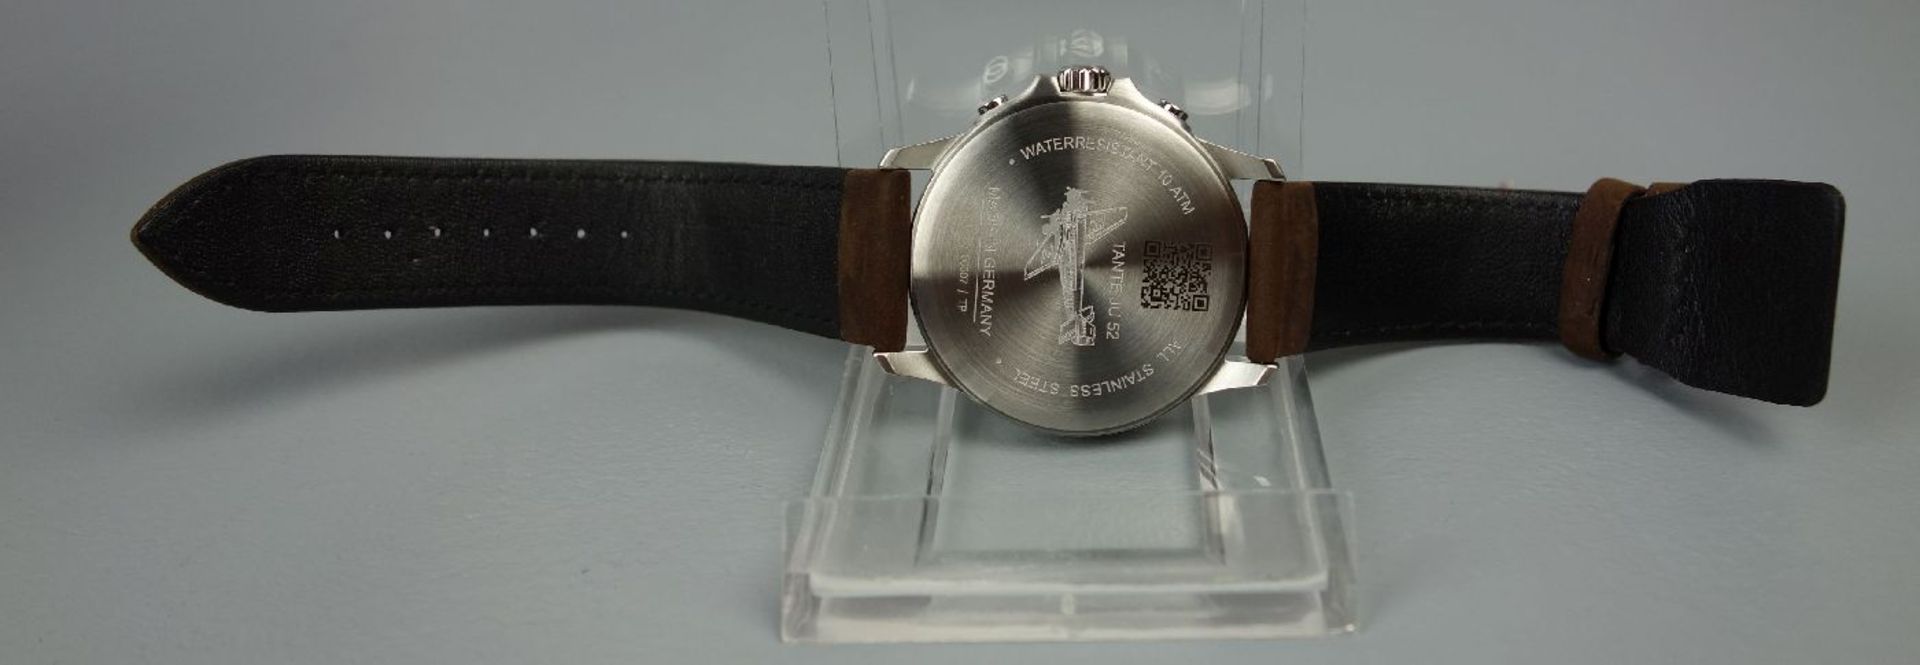 JUNKERS ARMBANDUHR JUNKERS / wristwatch, Quartz-Uhr, Manufaktur Point tec Electronic GmbH / - Image 5 of 5